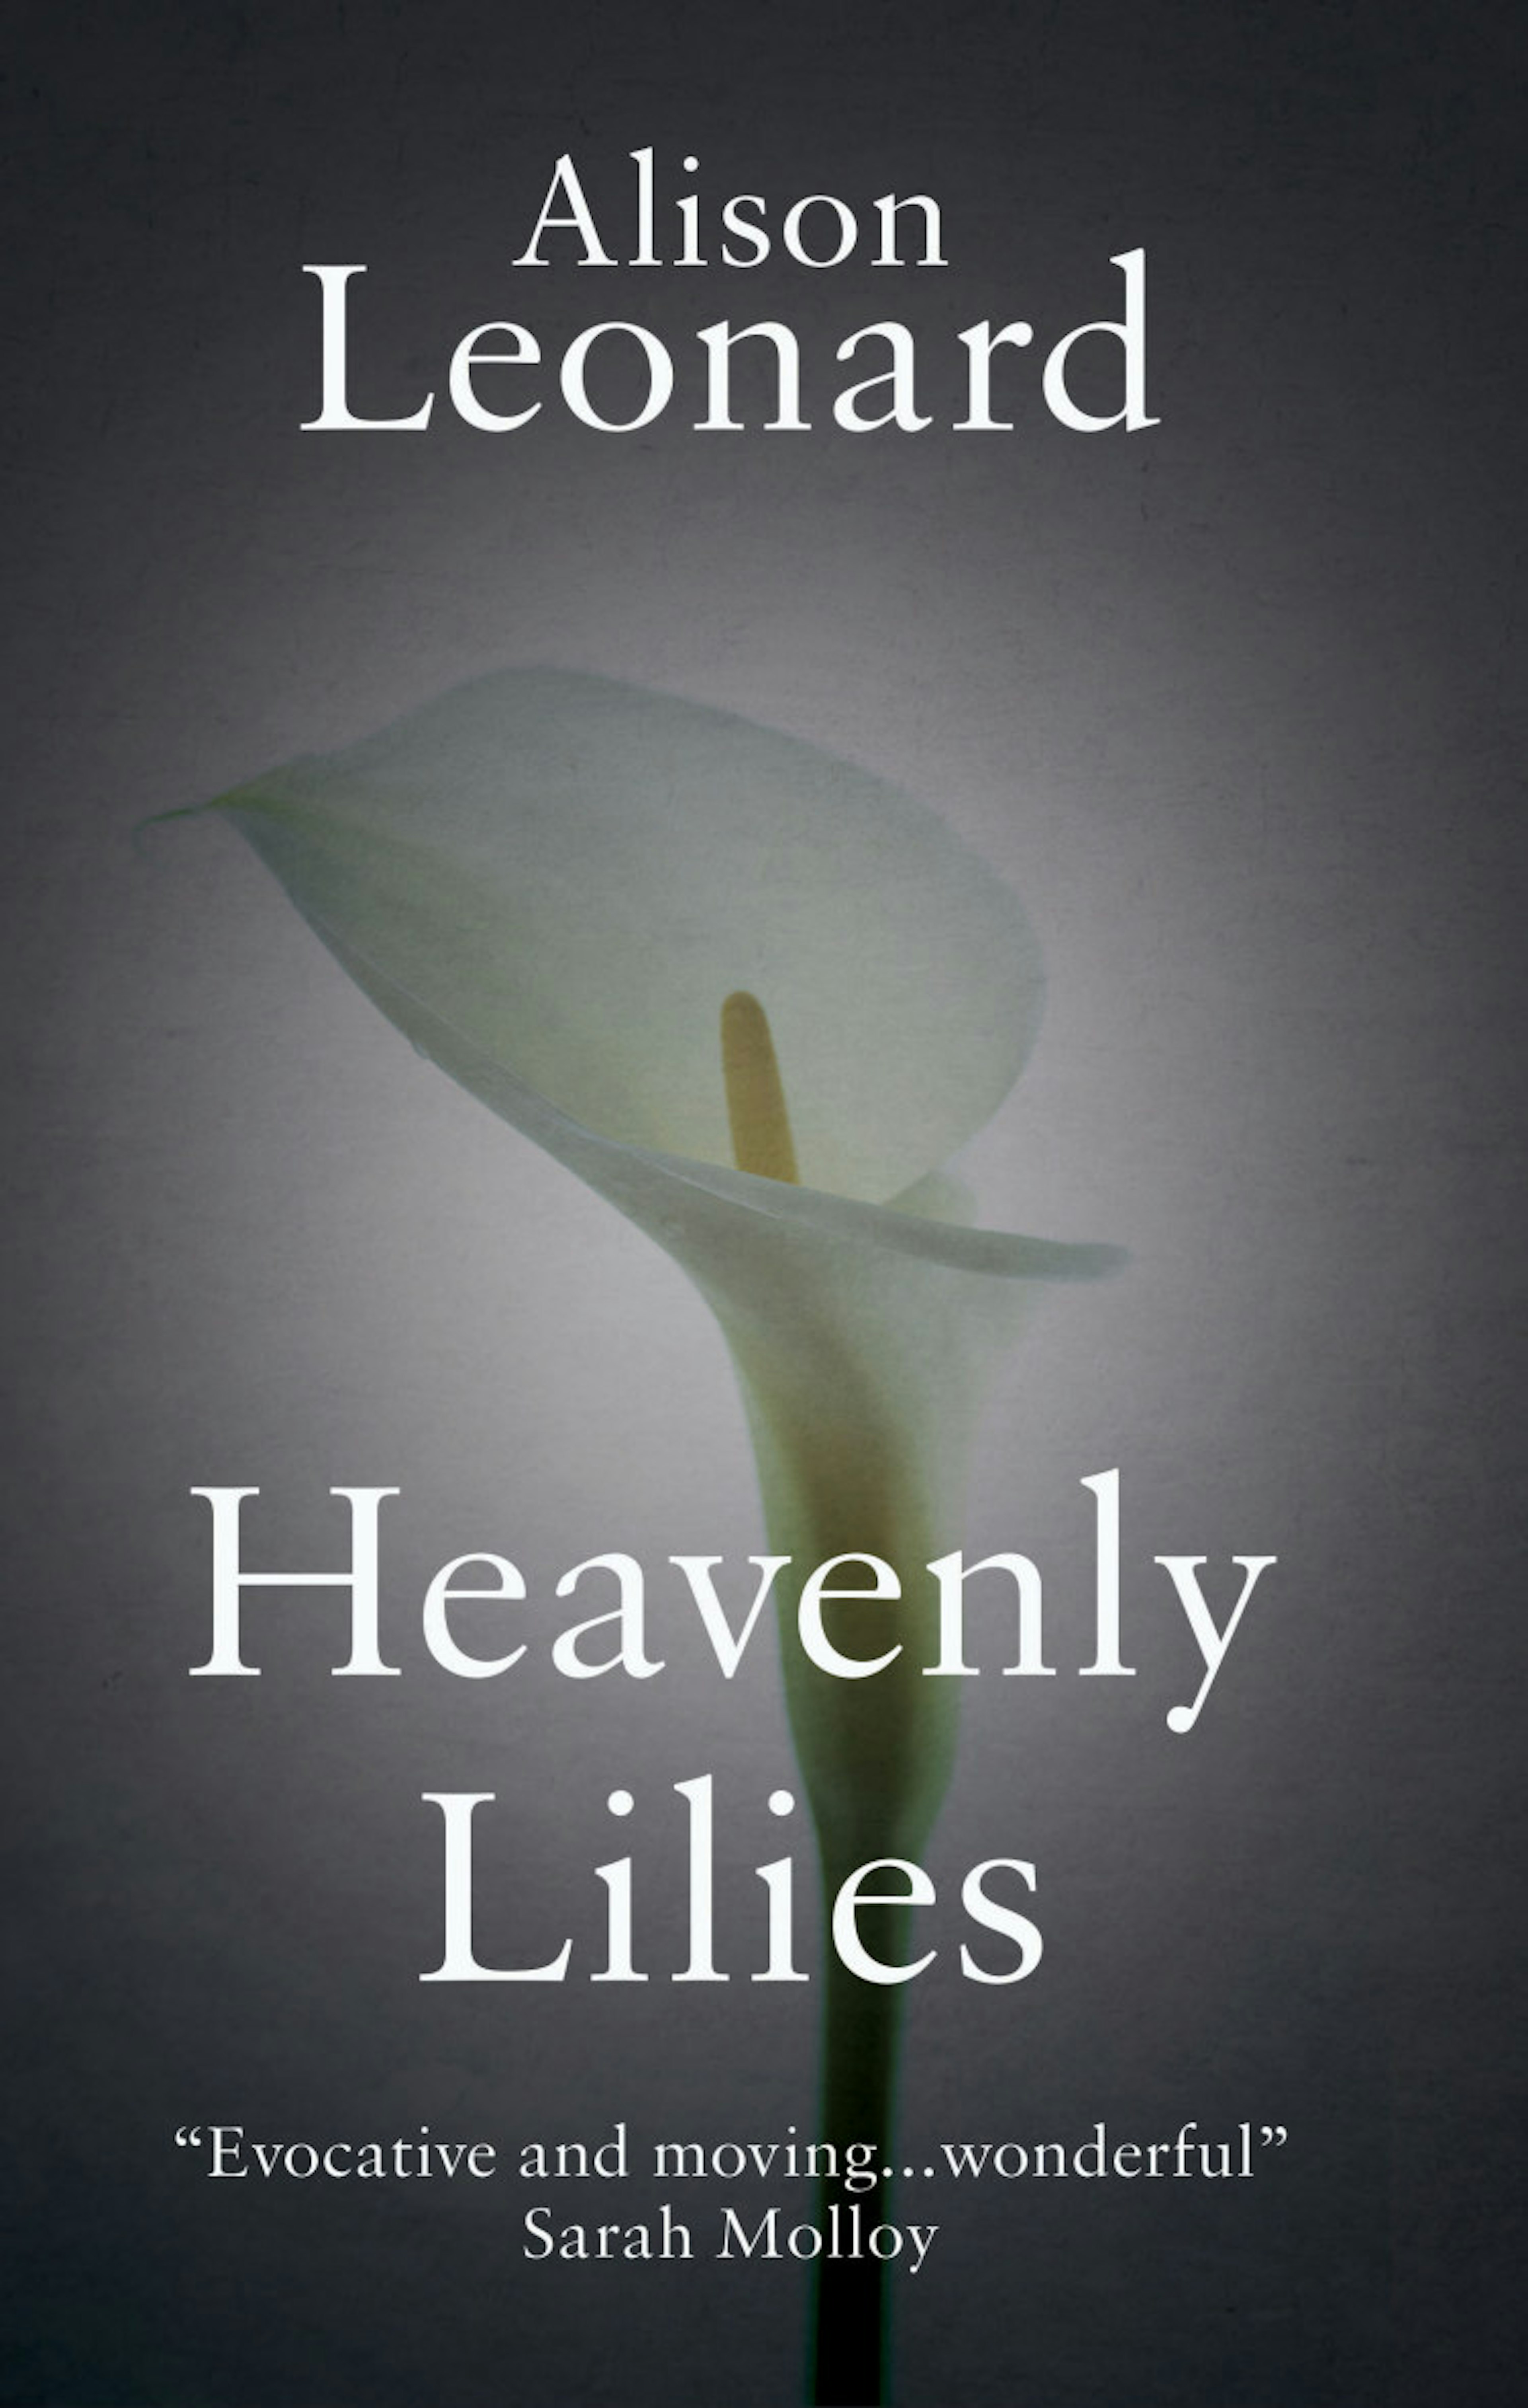 Heavenly Lilies